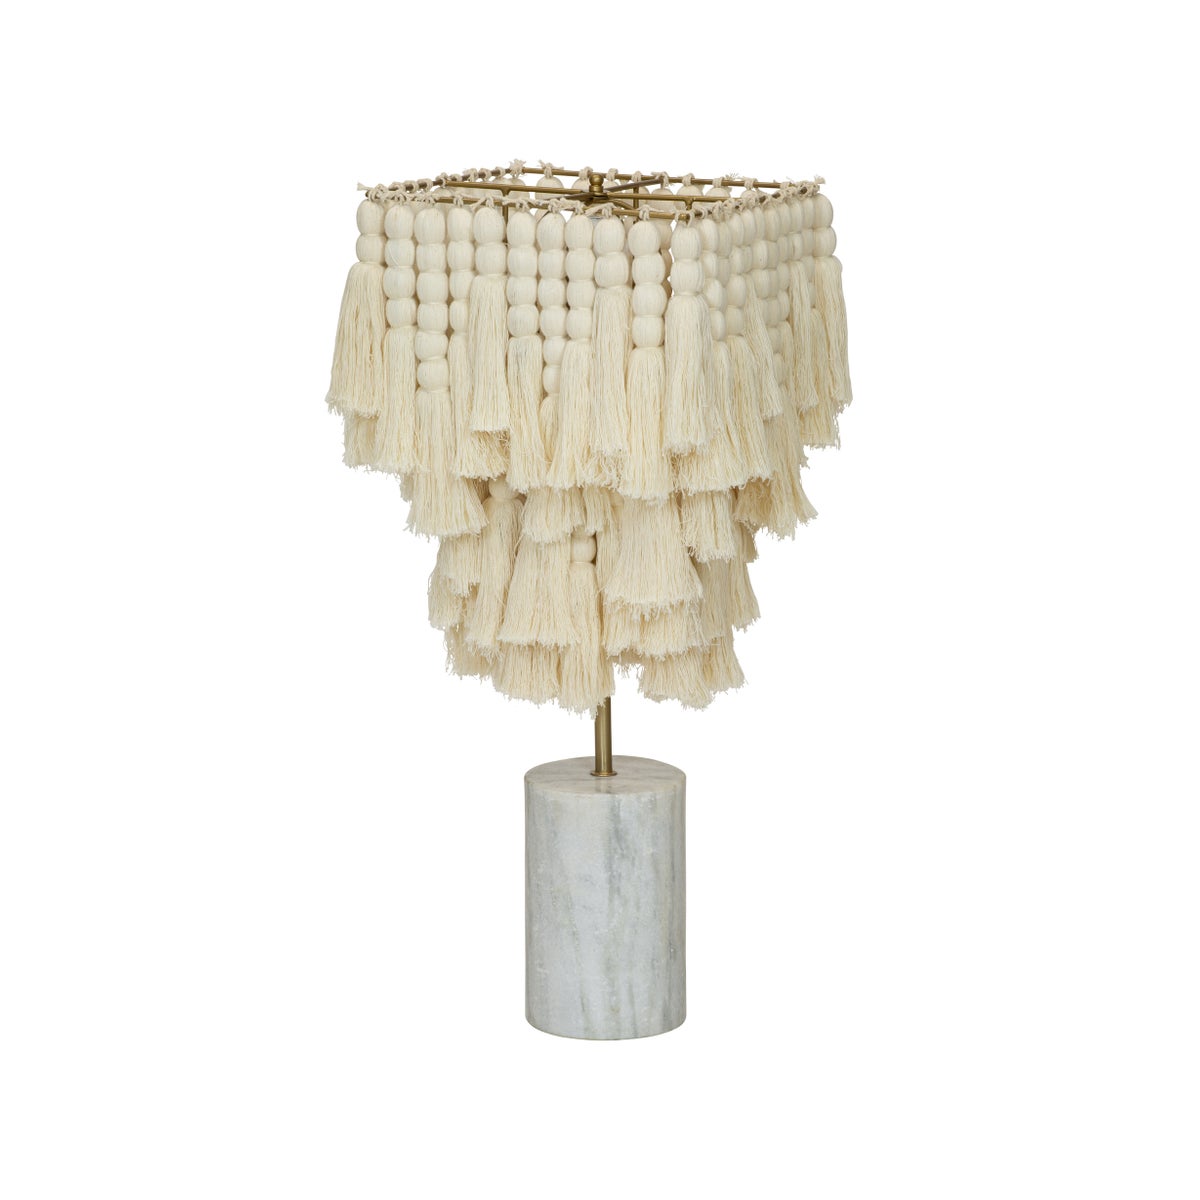 Redondo Table Lamp in White